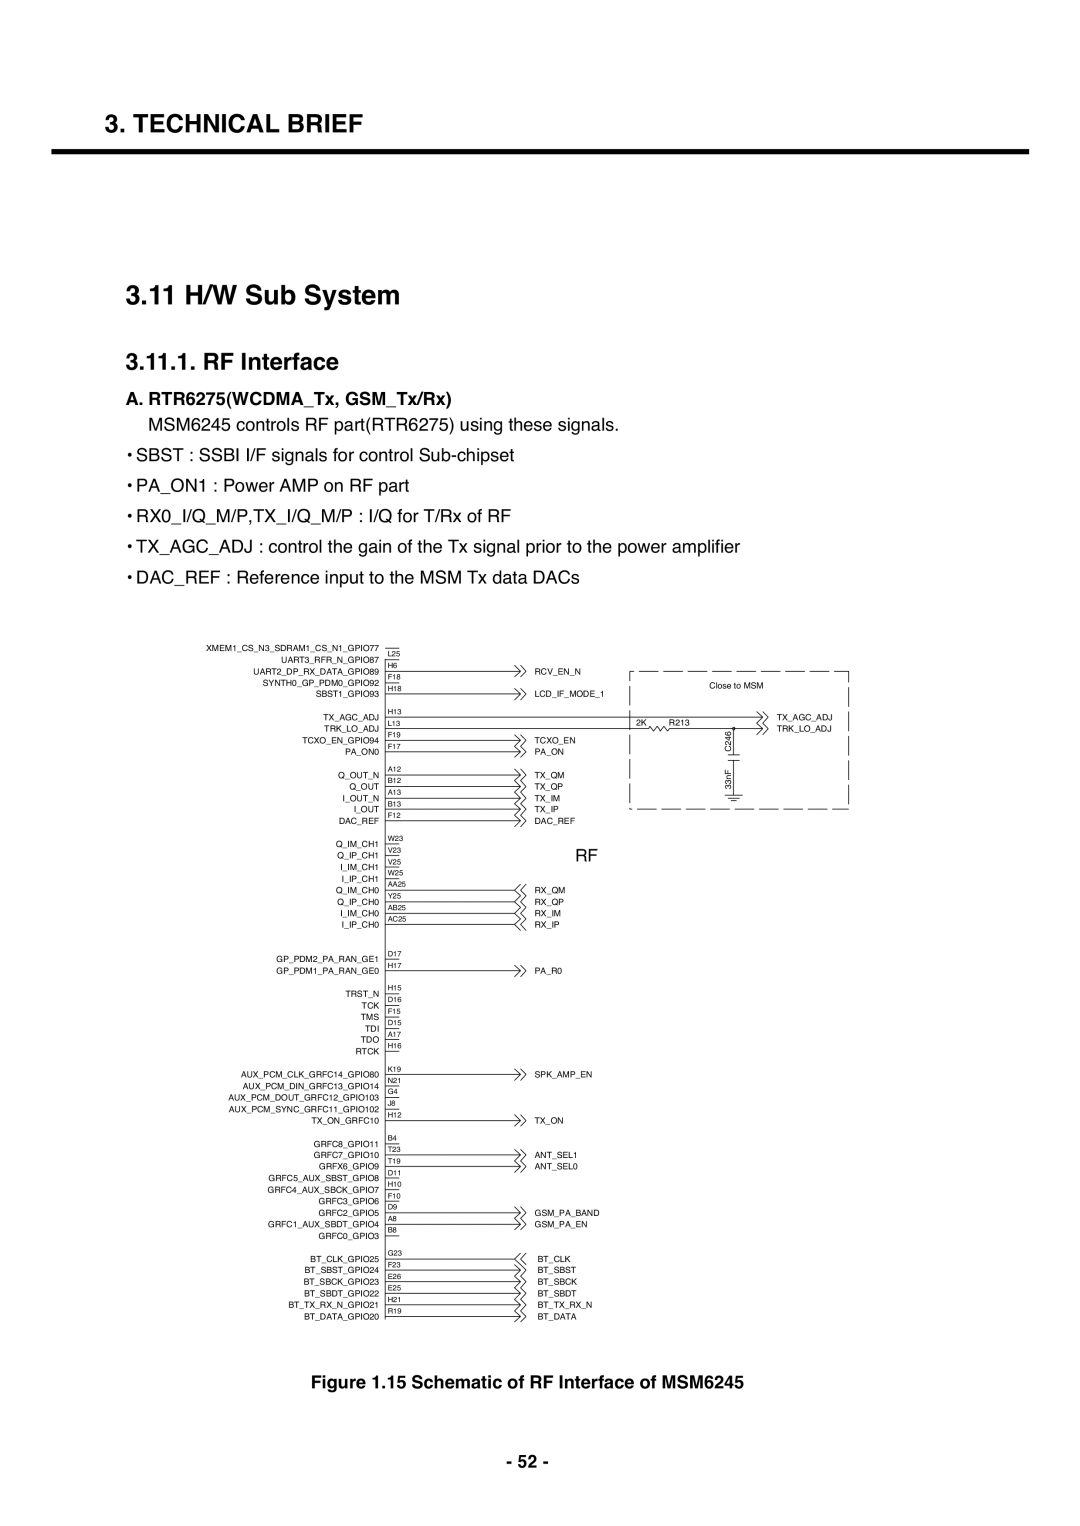 LG Electronics U250 service manual 11 H/W Sub System, RF Interface, RTR6275WCDMATx, GSMTx/Rx 